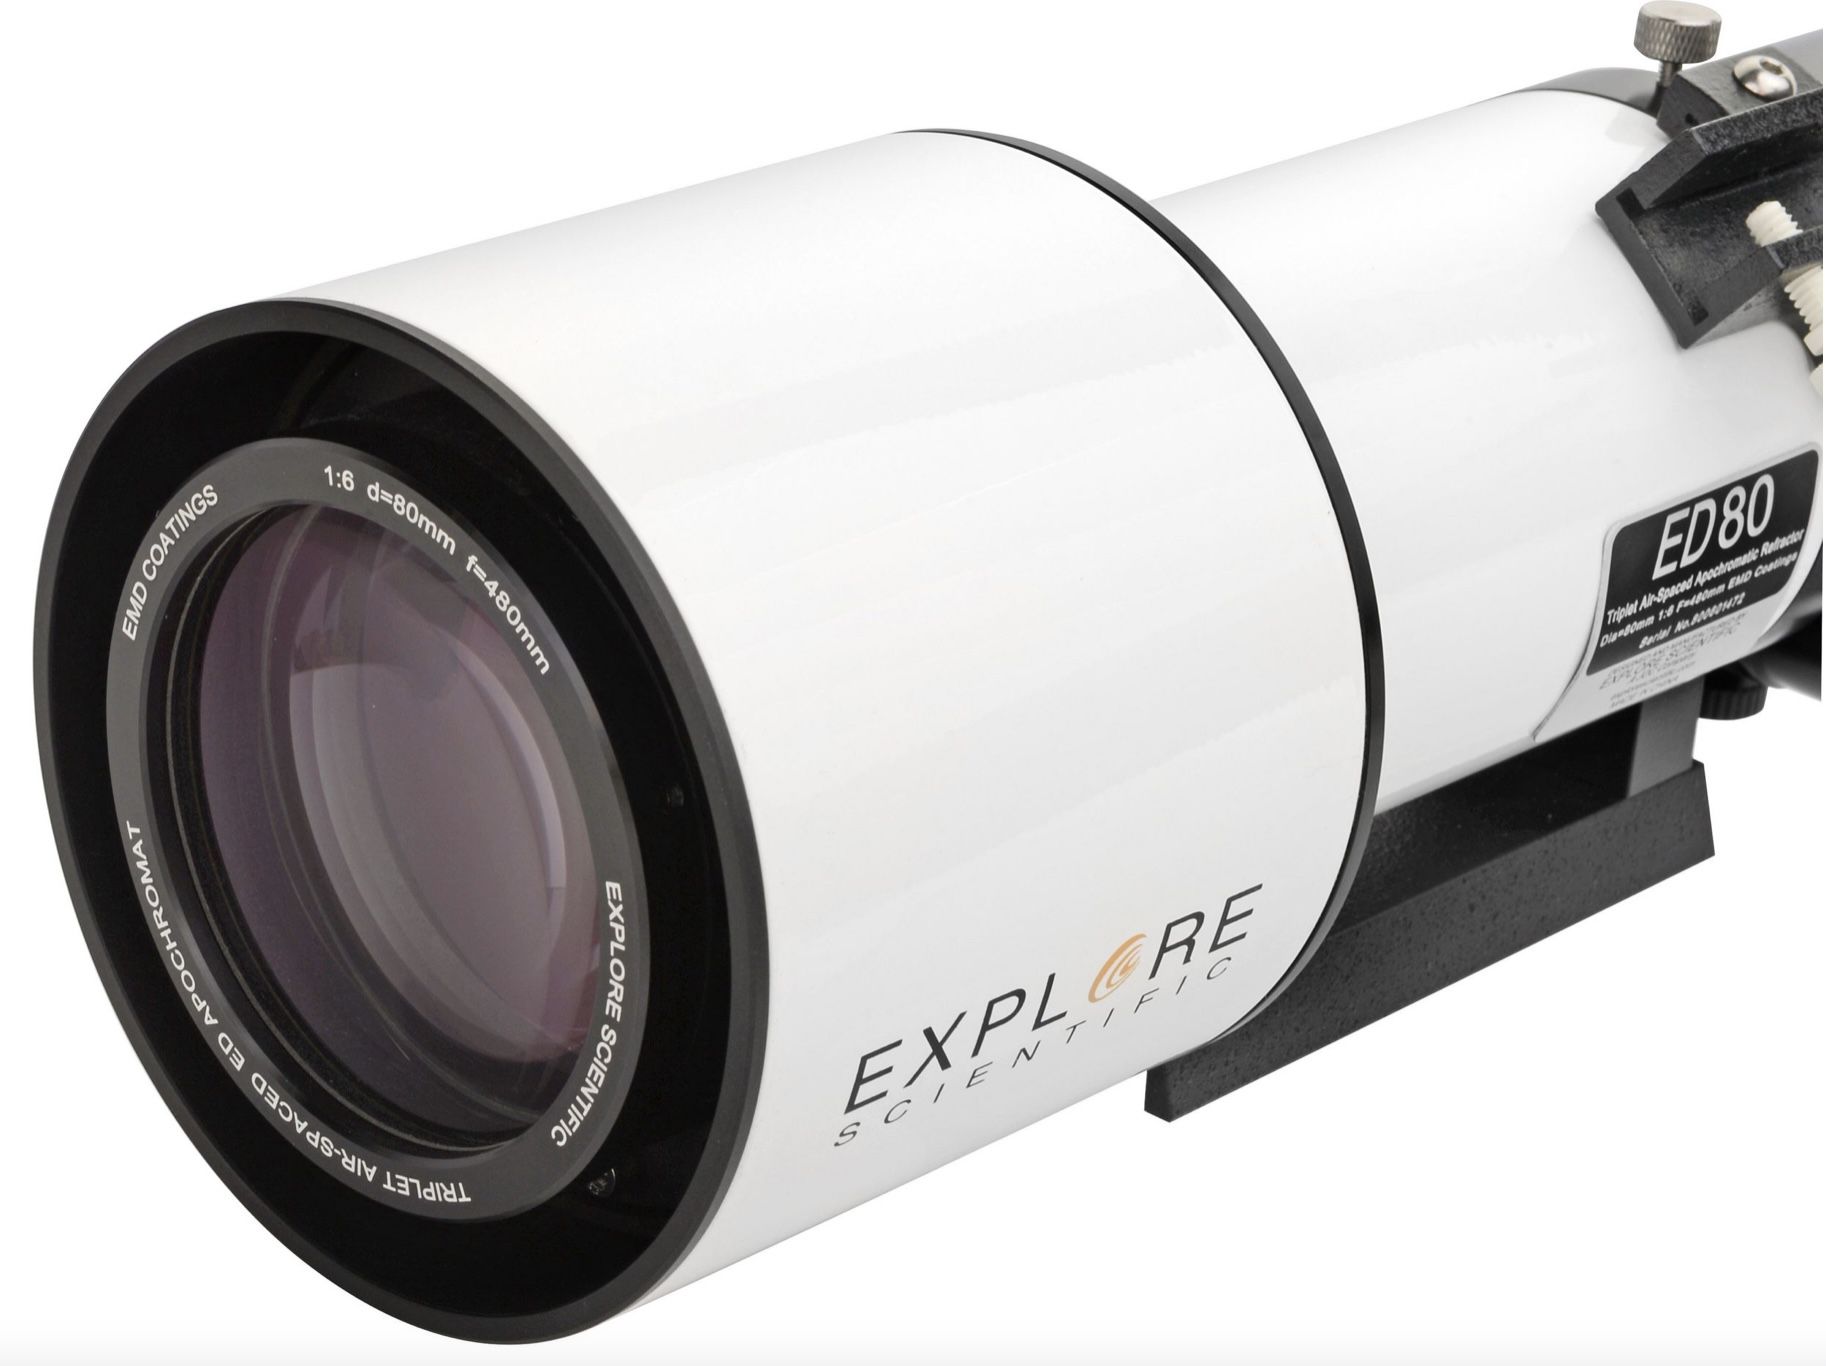 Explore Scientific ED APO 80mm f/6 FCD 100 Alu HEX Linsen Teleskop für 947,80€ (statt 1.050€)